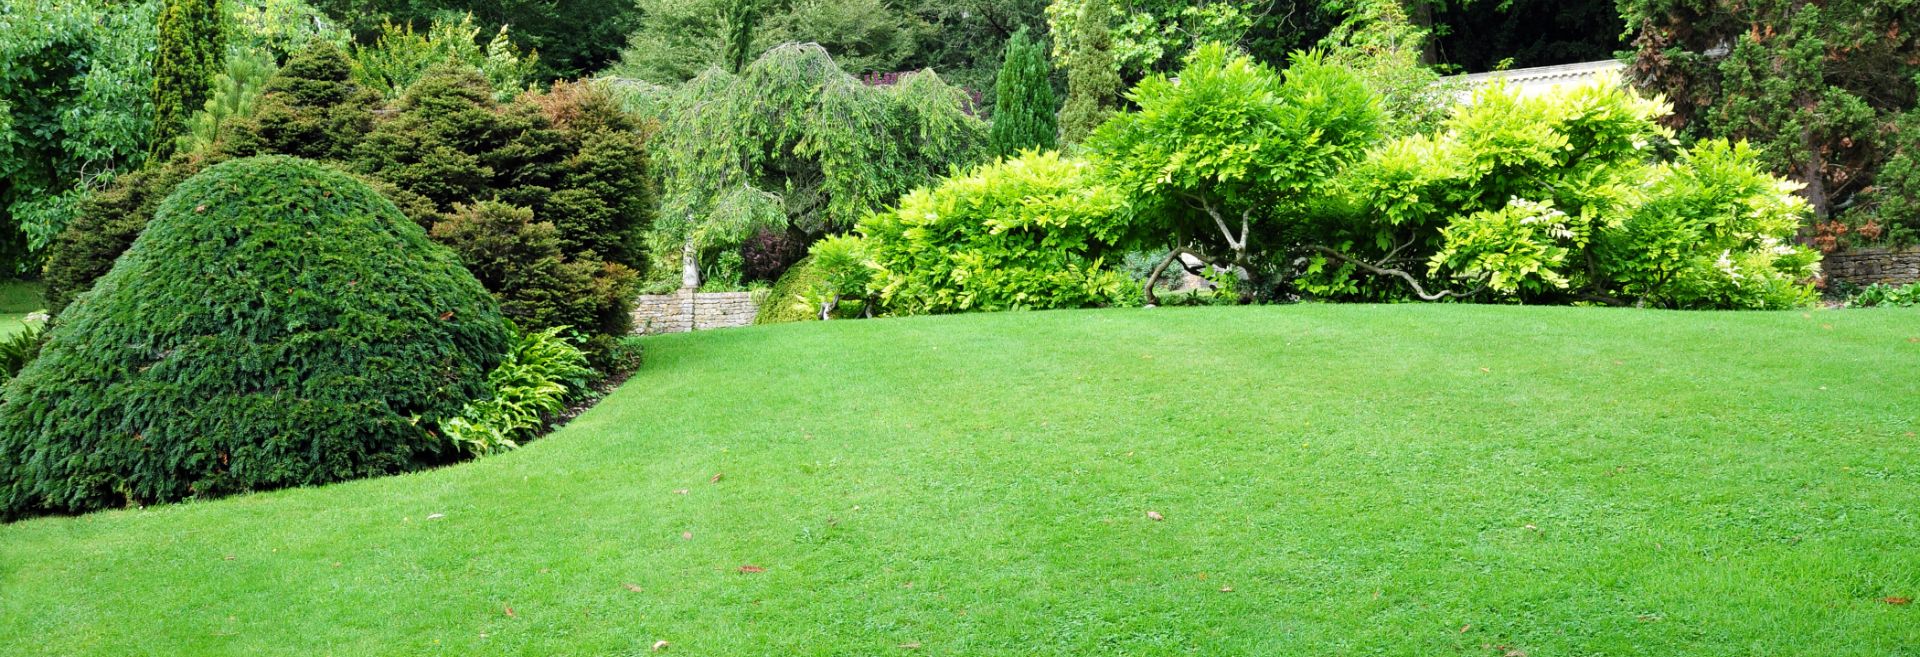 green lawn in the backyard